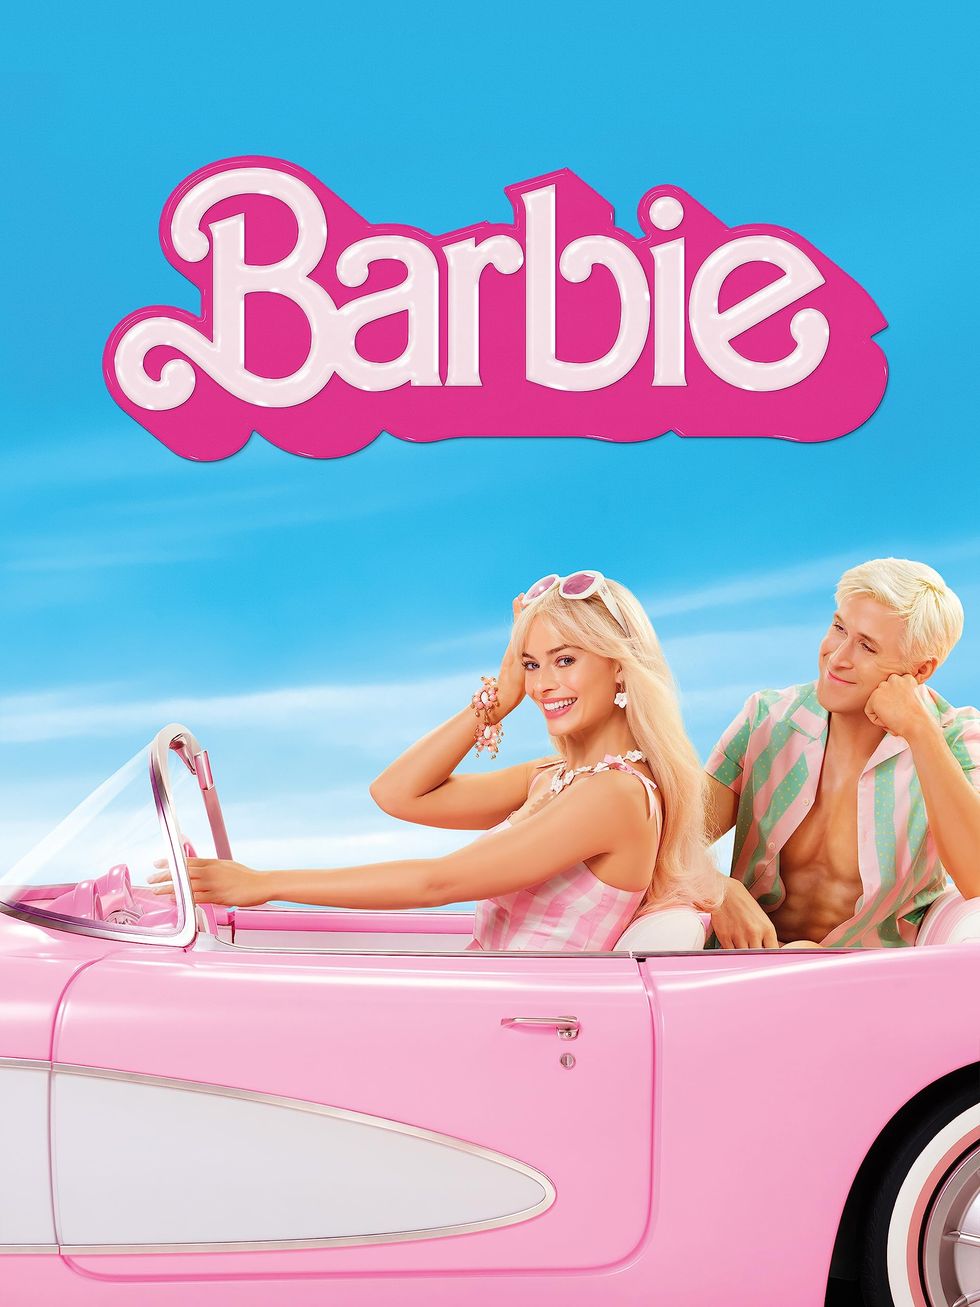 Barbie' movie streaming now on Prime Video